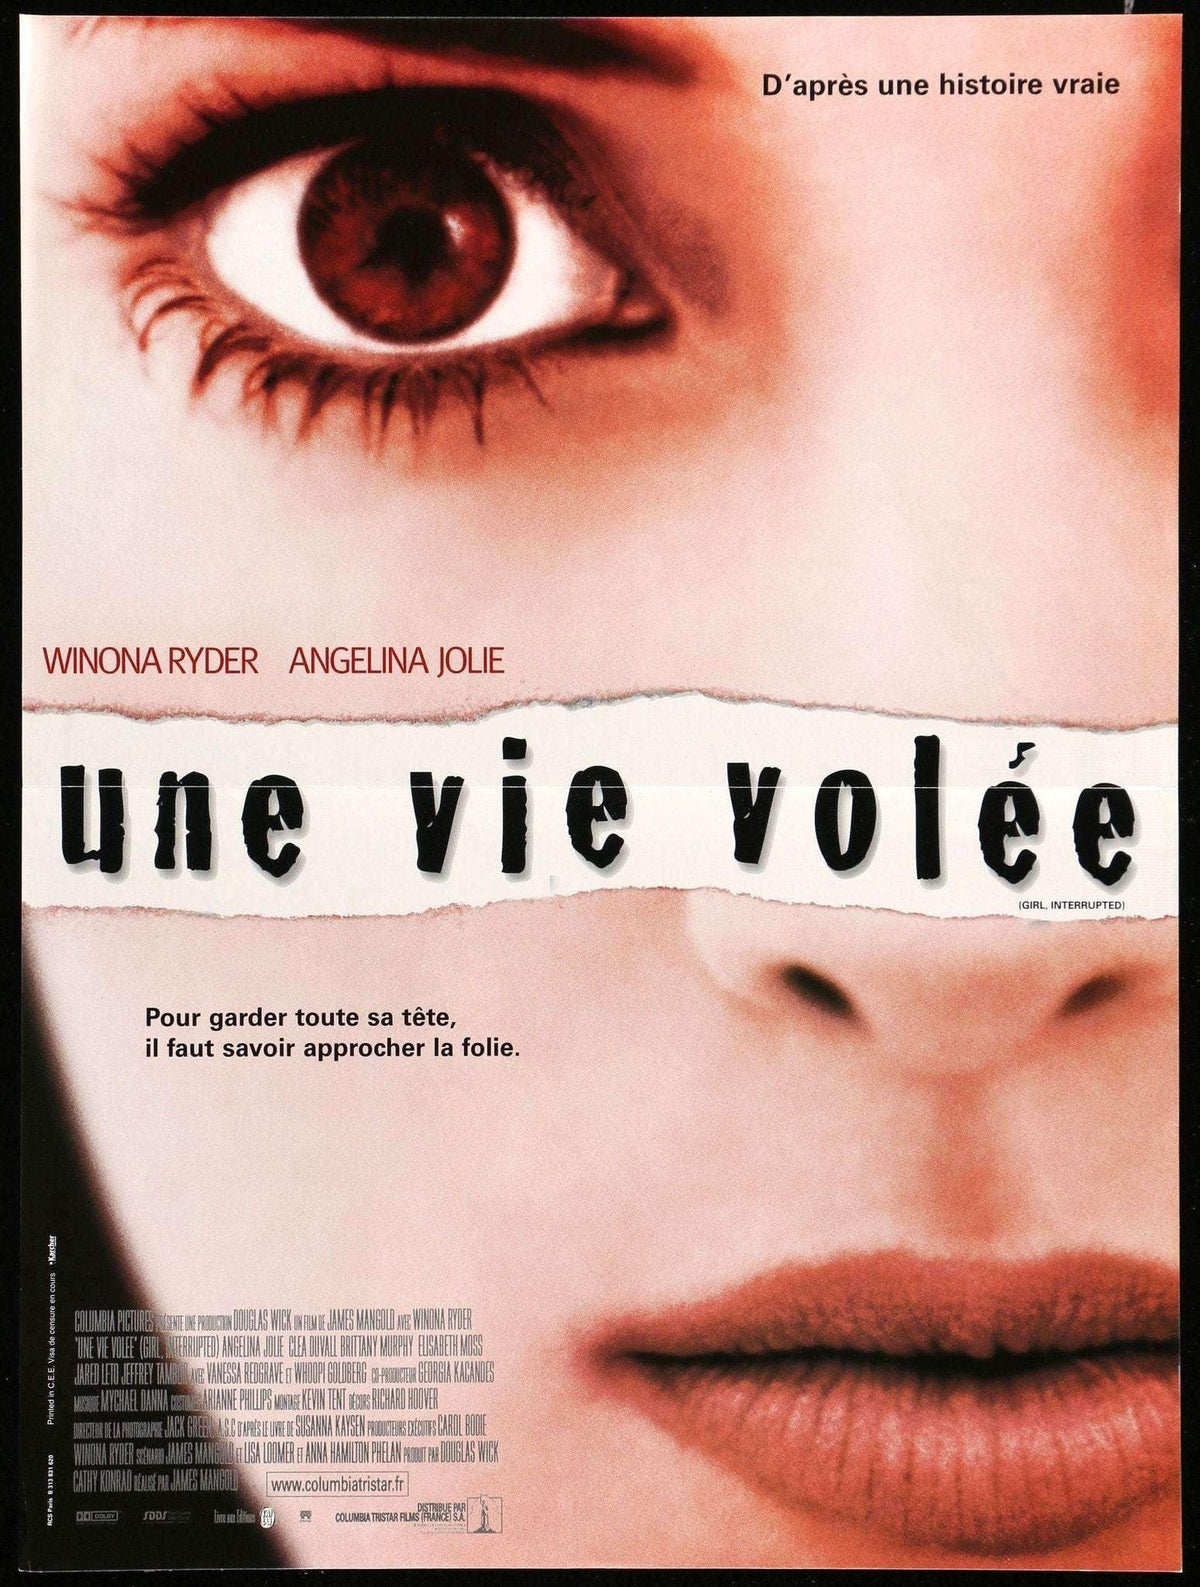 Girl Interrupted (1999) original movie poster for sale at Original Film Art